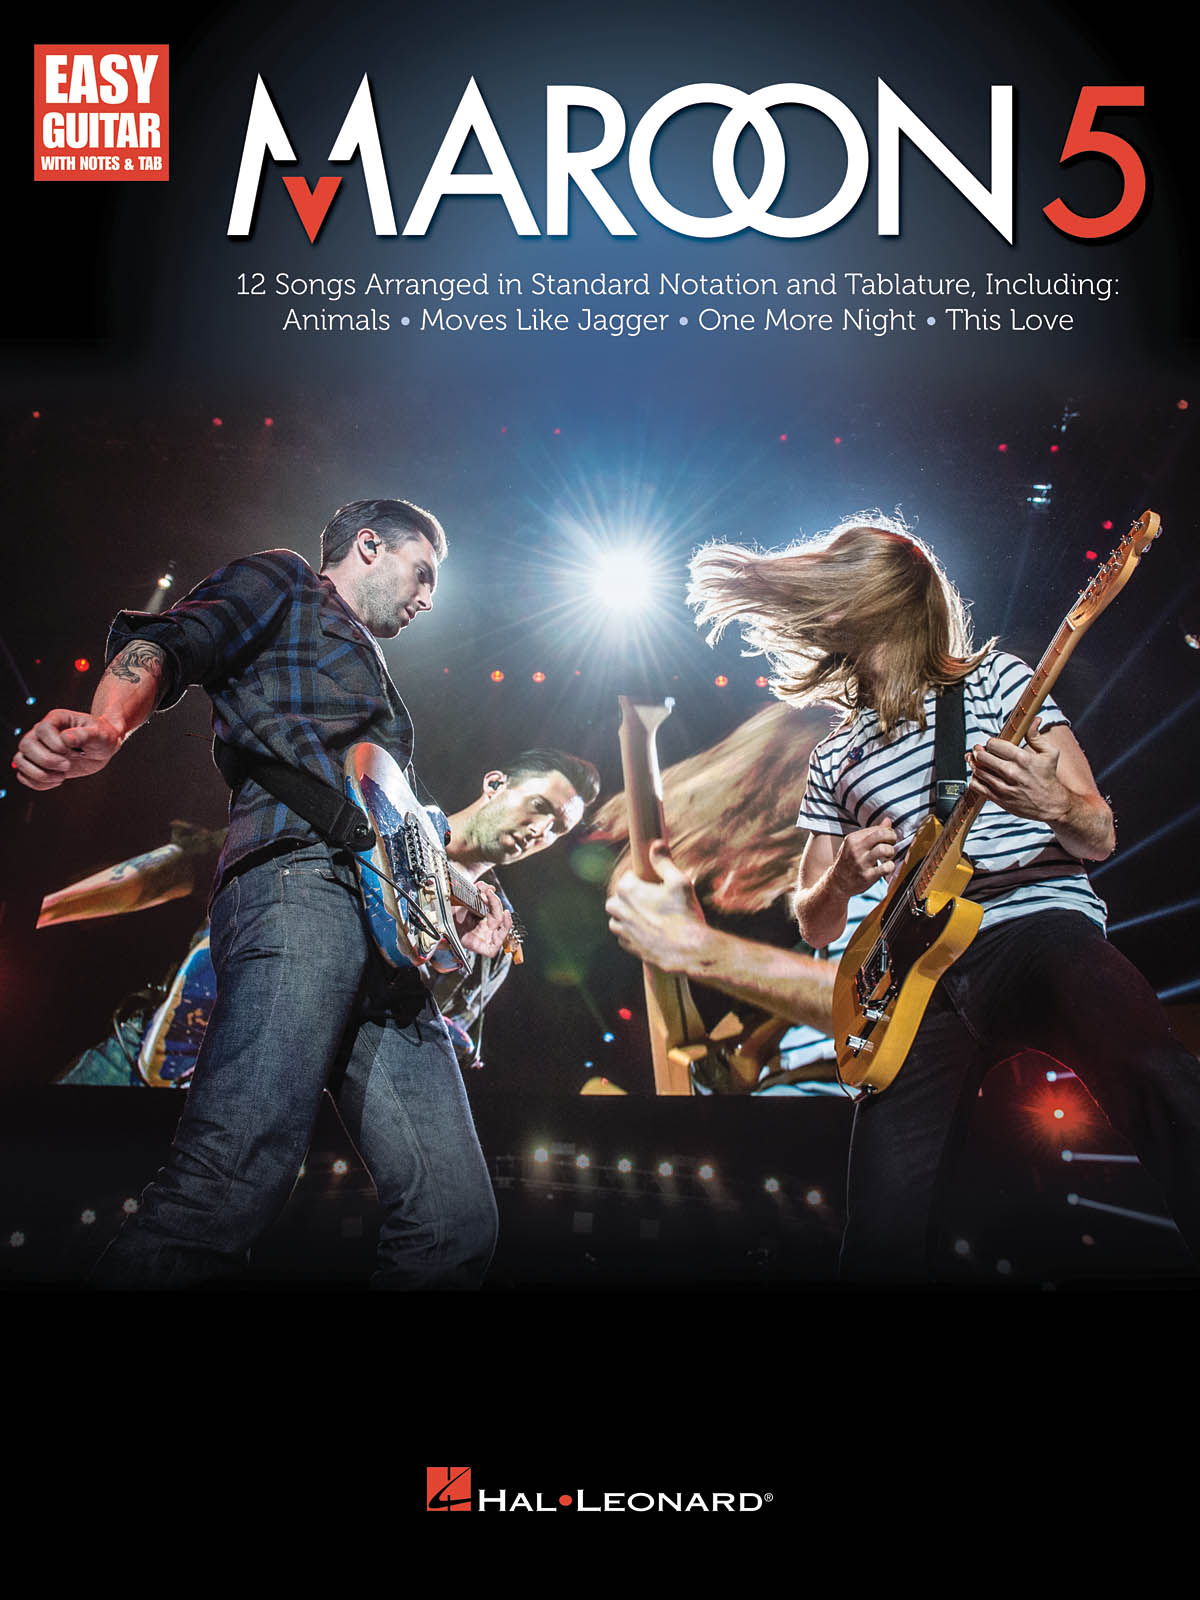 Maroon 5 - Easy Guitar with Notes & Tab - písně na kytaru s TAB